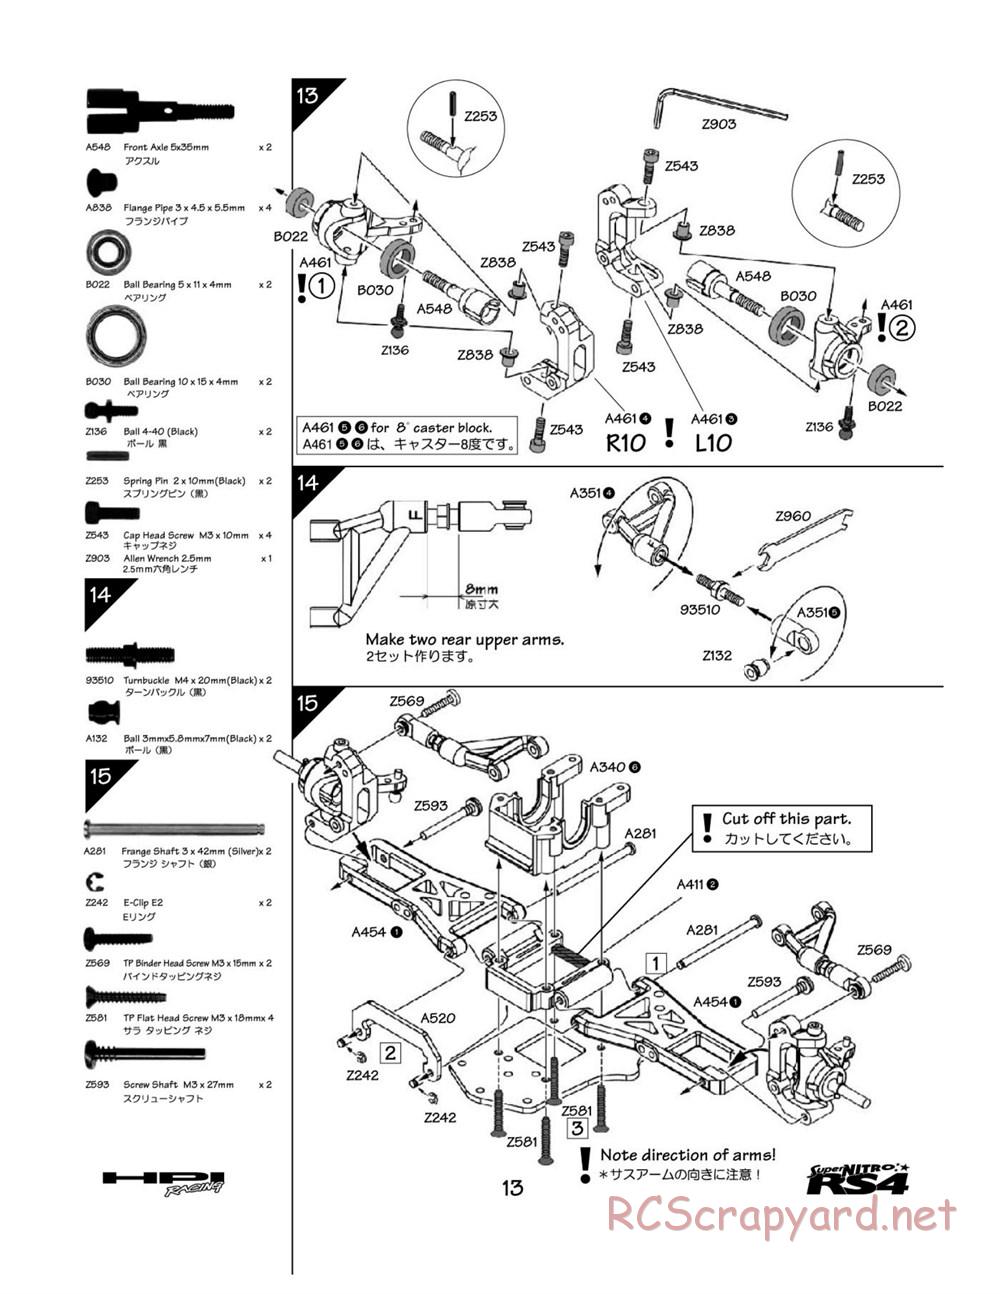 HPI - Super Nitro RS4 - Manual - Page 13